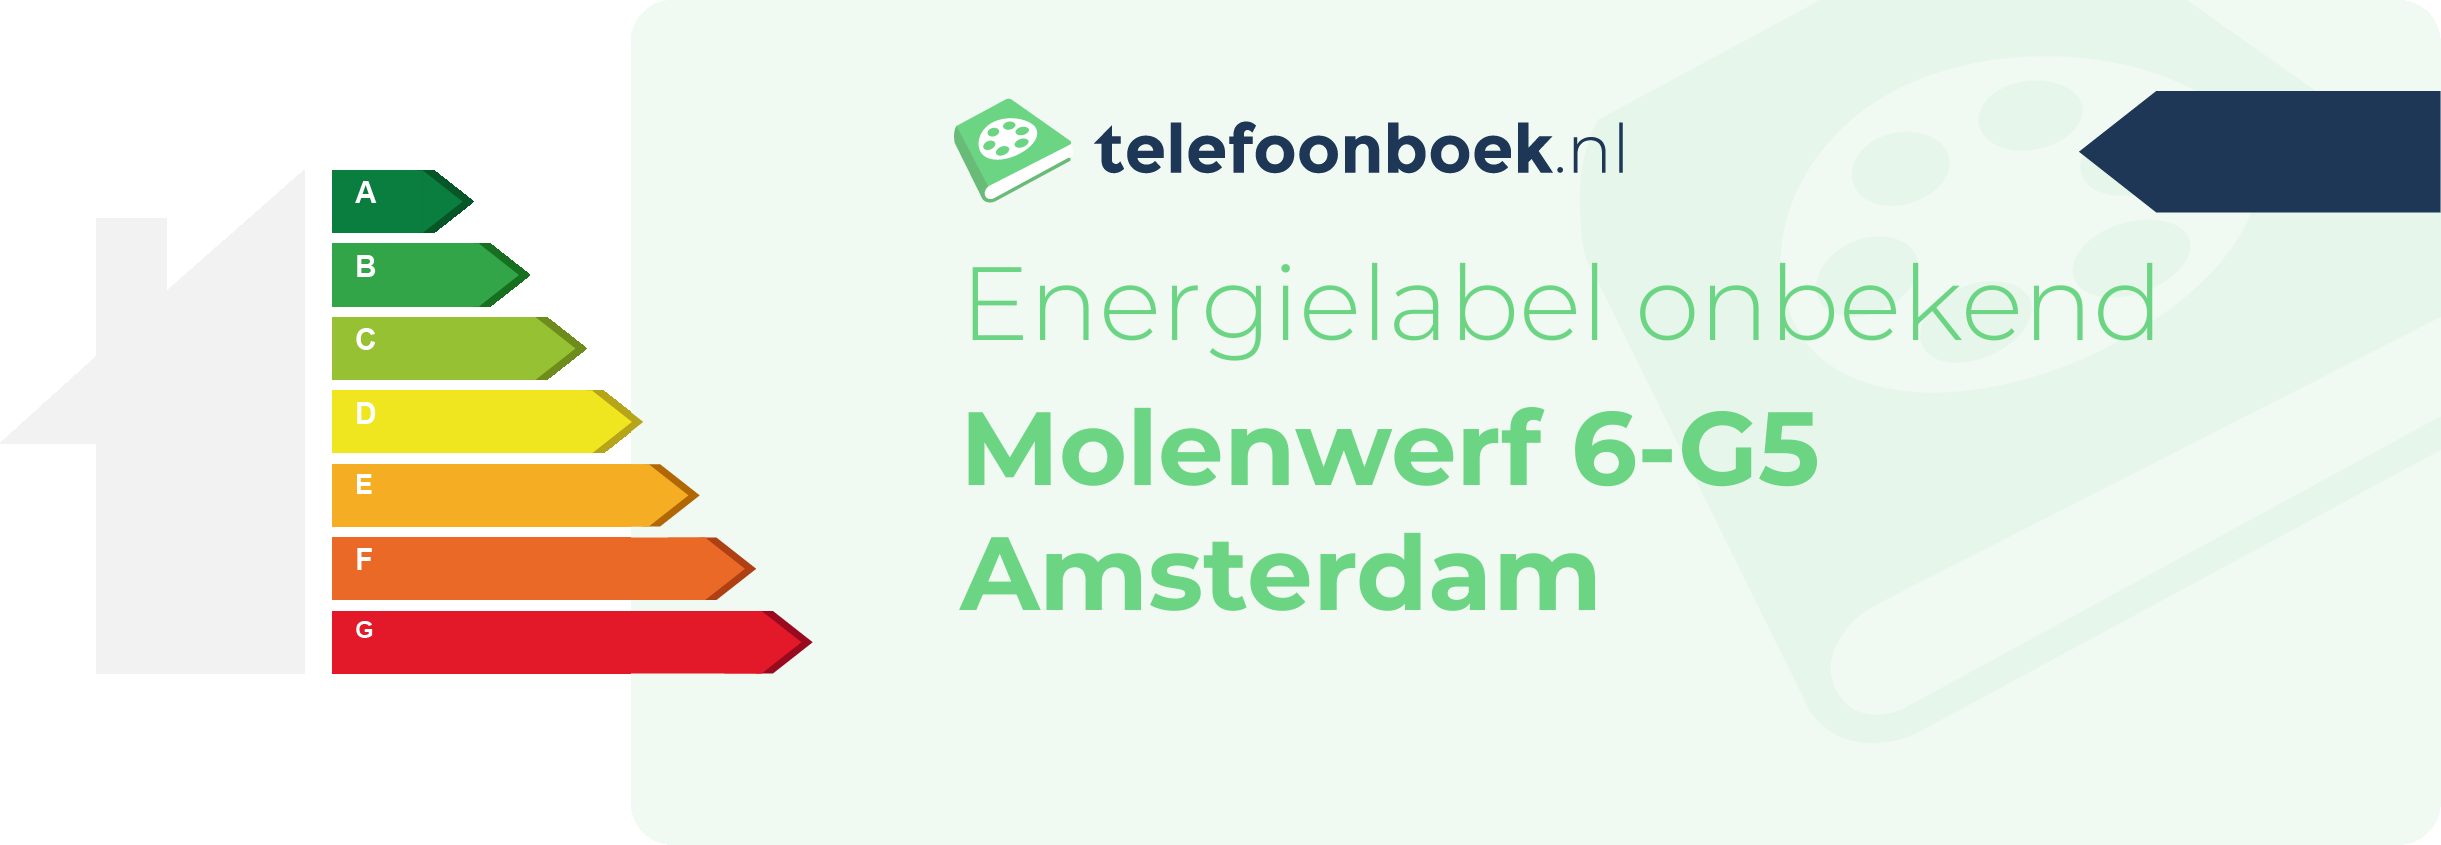 Energielabel Molenwerf 6-G5 Amsterdam